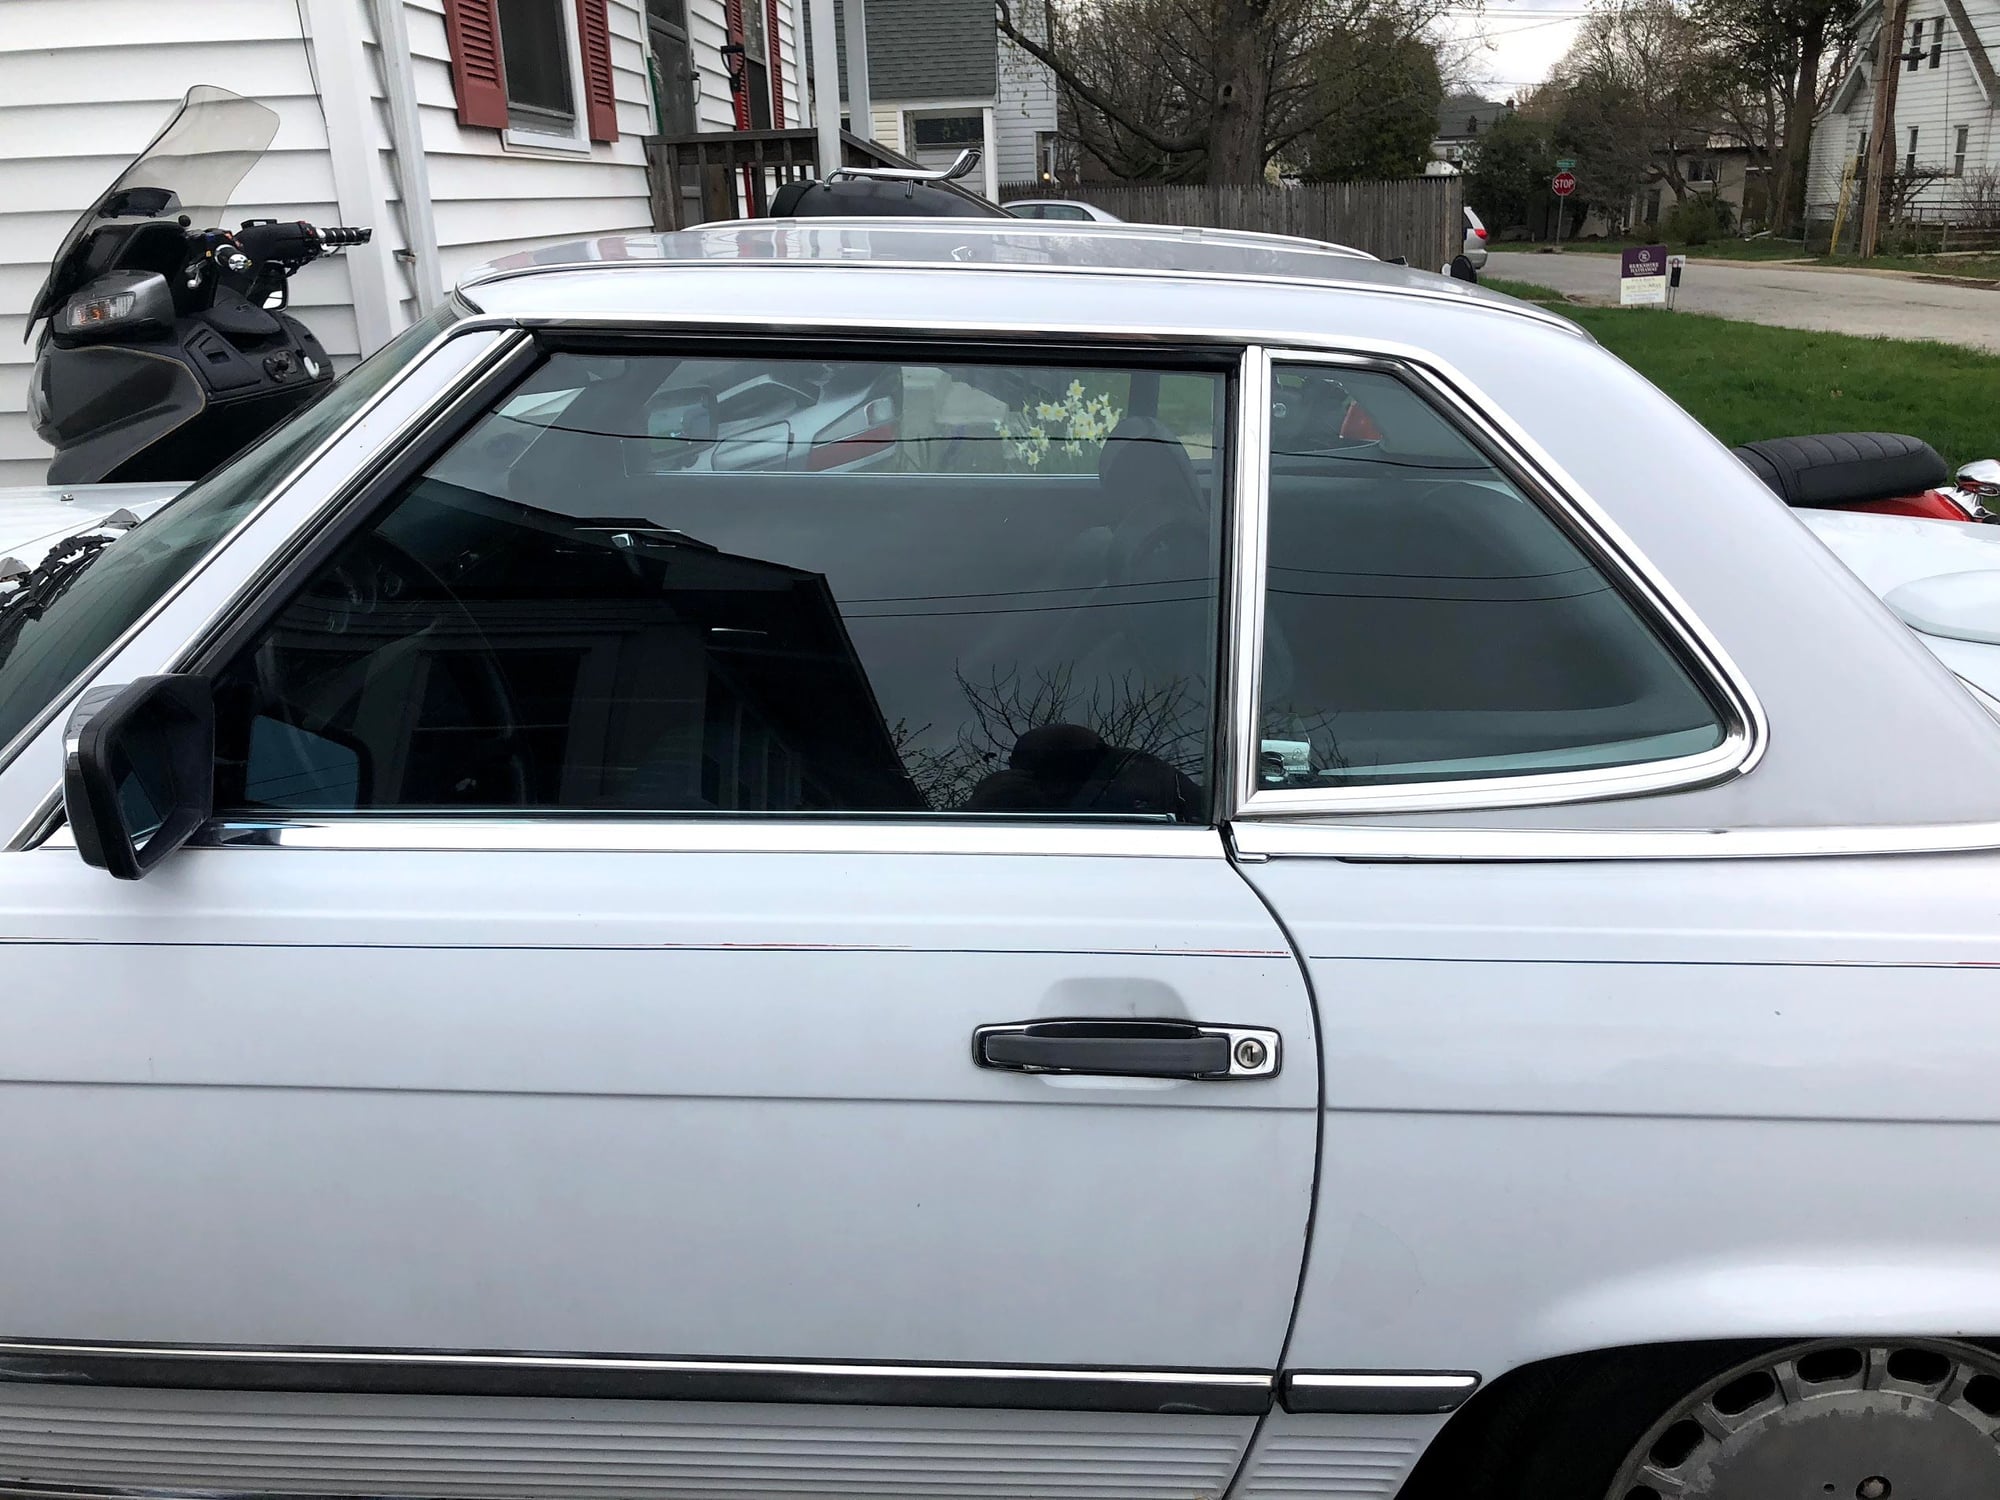 Miscellaneous - Hardtop convertible roof - '86 560SL - white. Delaware - Used - 1986 Mercedes-Benz 560SL - Wilmington, DE 19809, United States